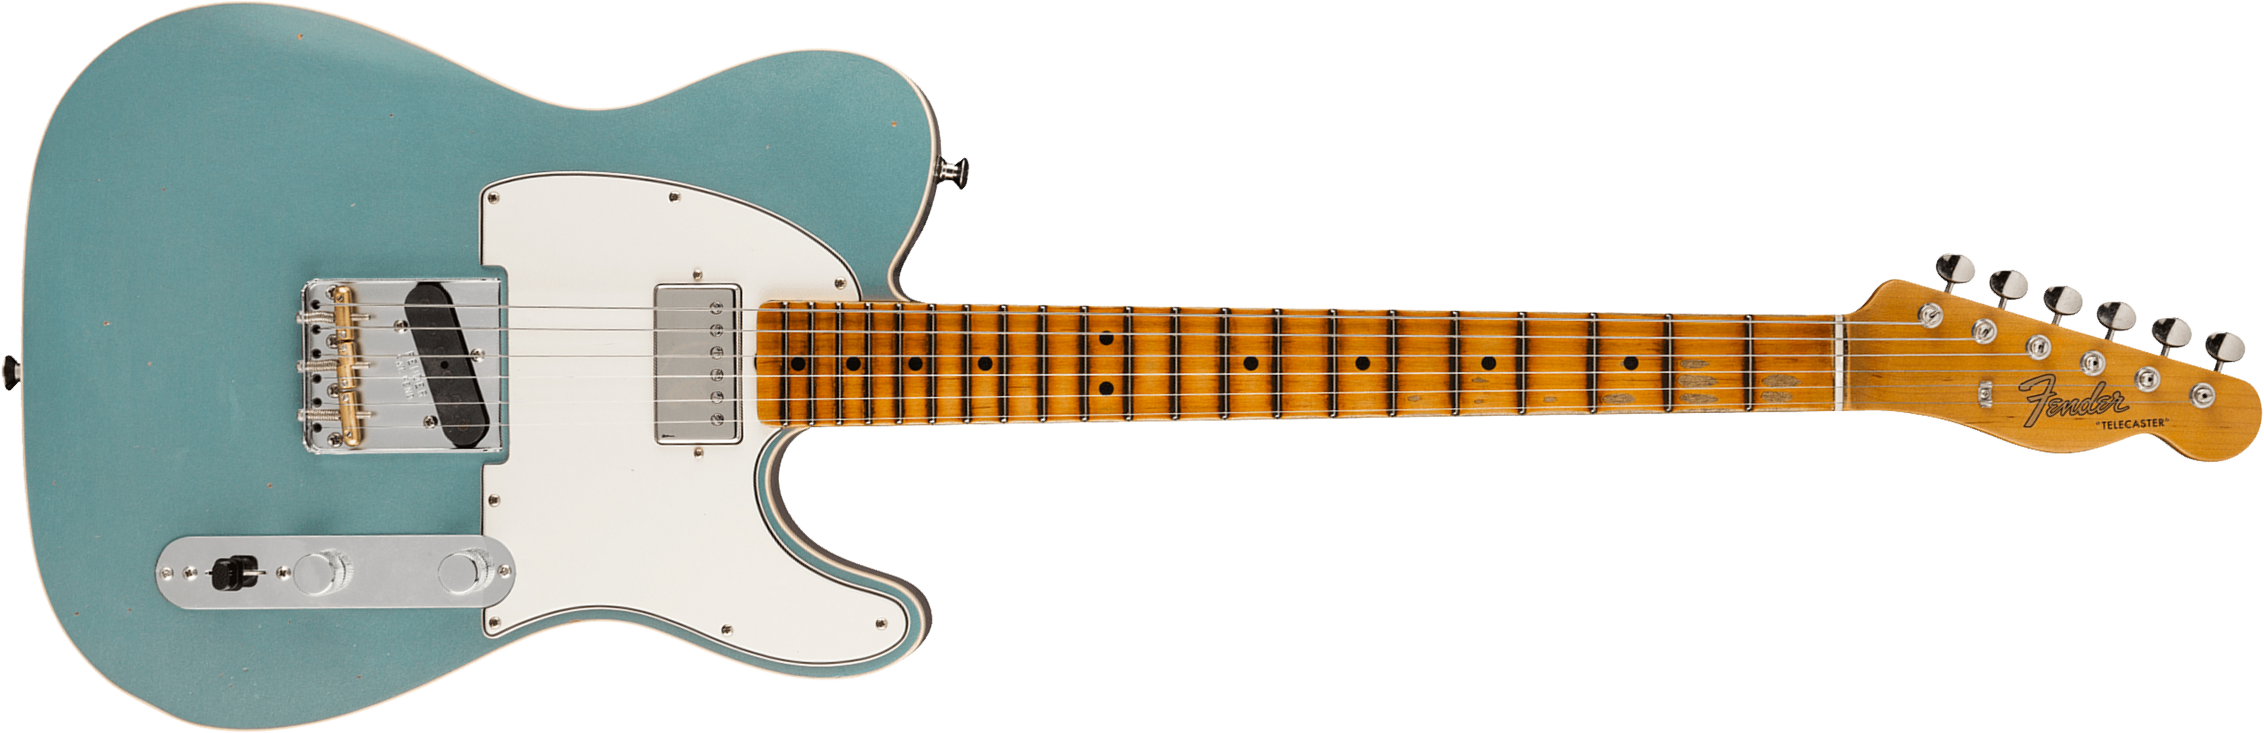 Fender Custom Shop Tele Postmodern Usa Sh Ht Mn - Journeyman Relic Firemist Silver - E-Gitarre in Teleform - Main picture